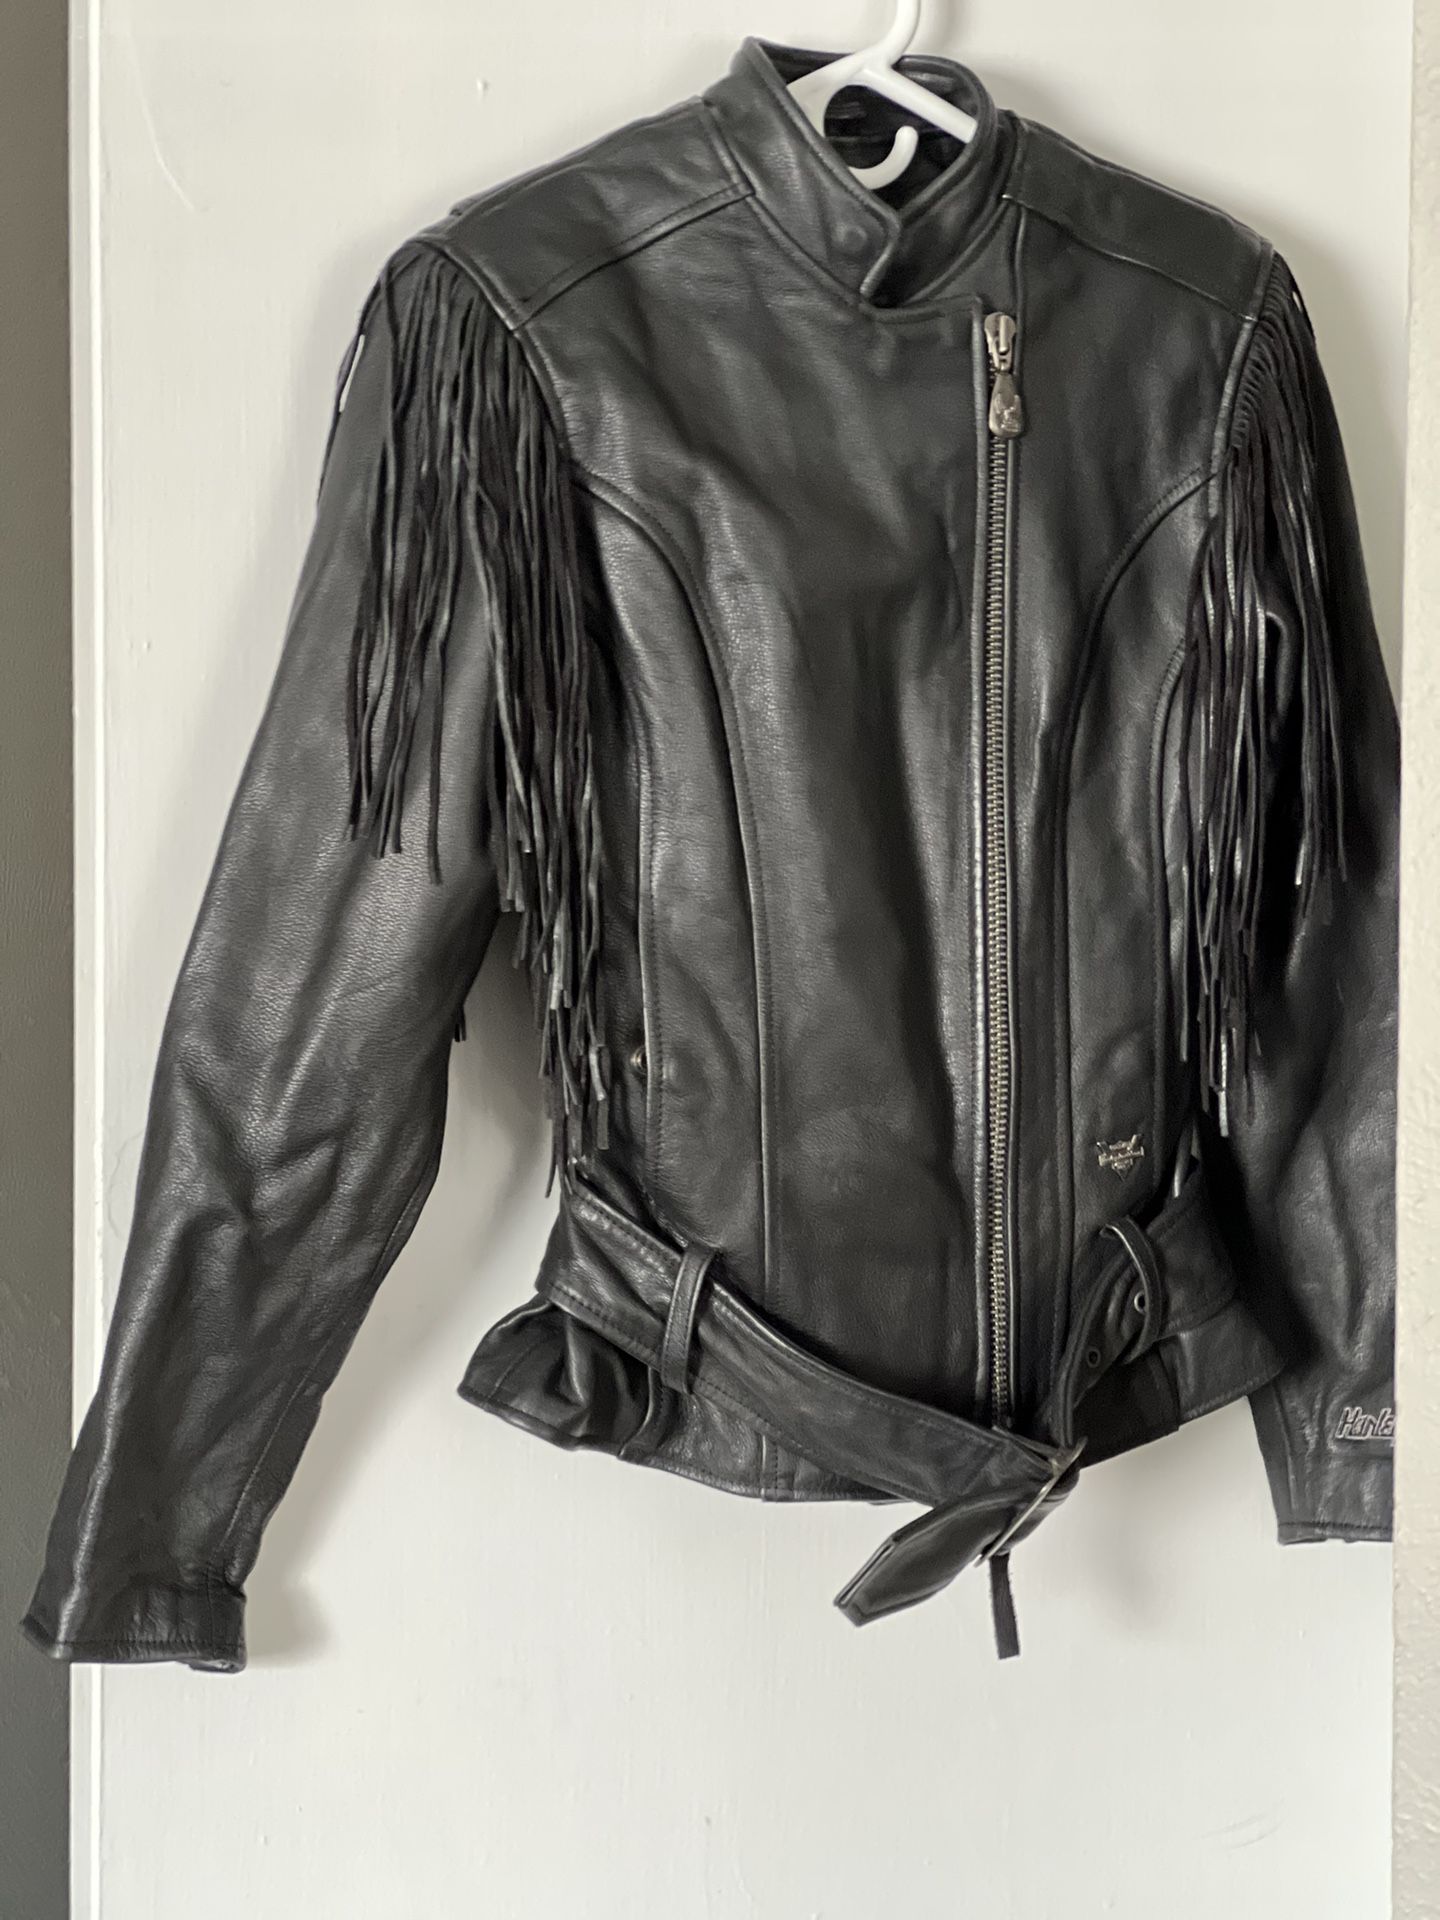 Ladies Harley Davidson Leather Jacket 